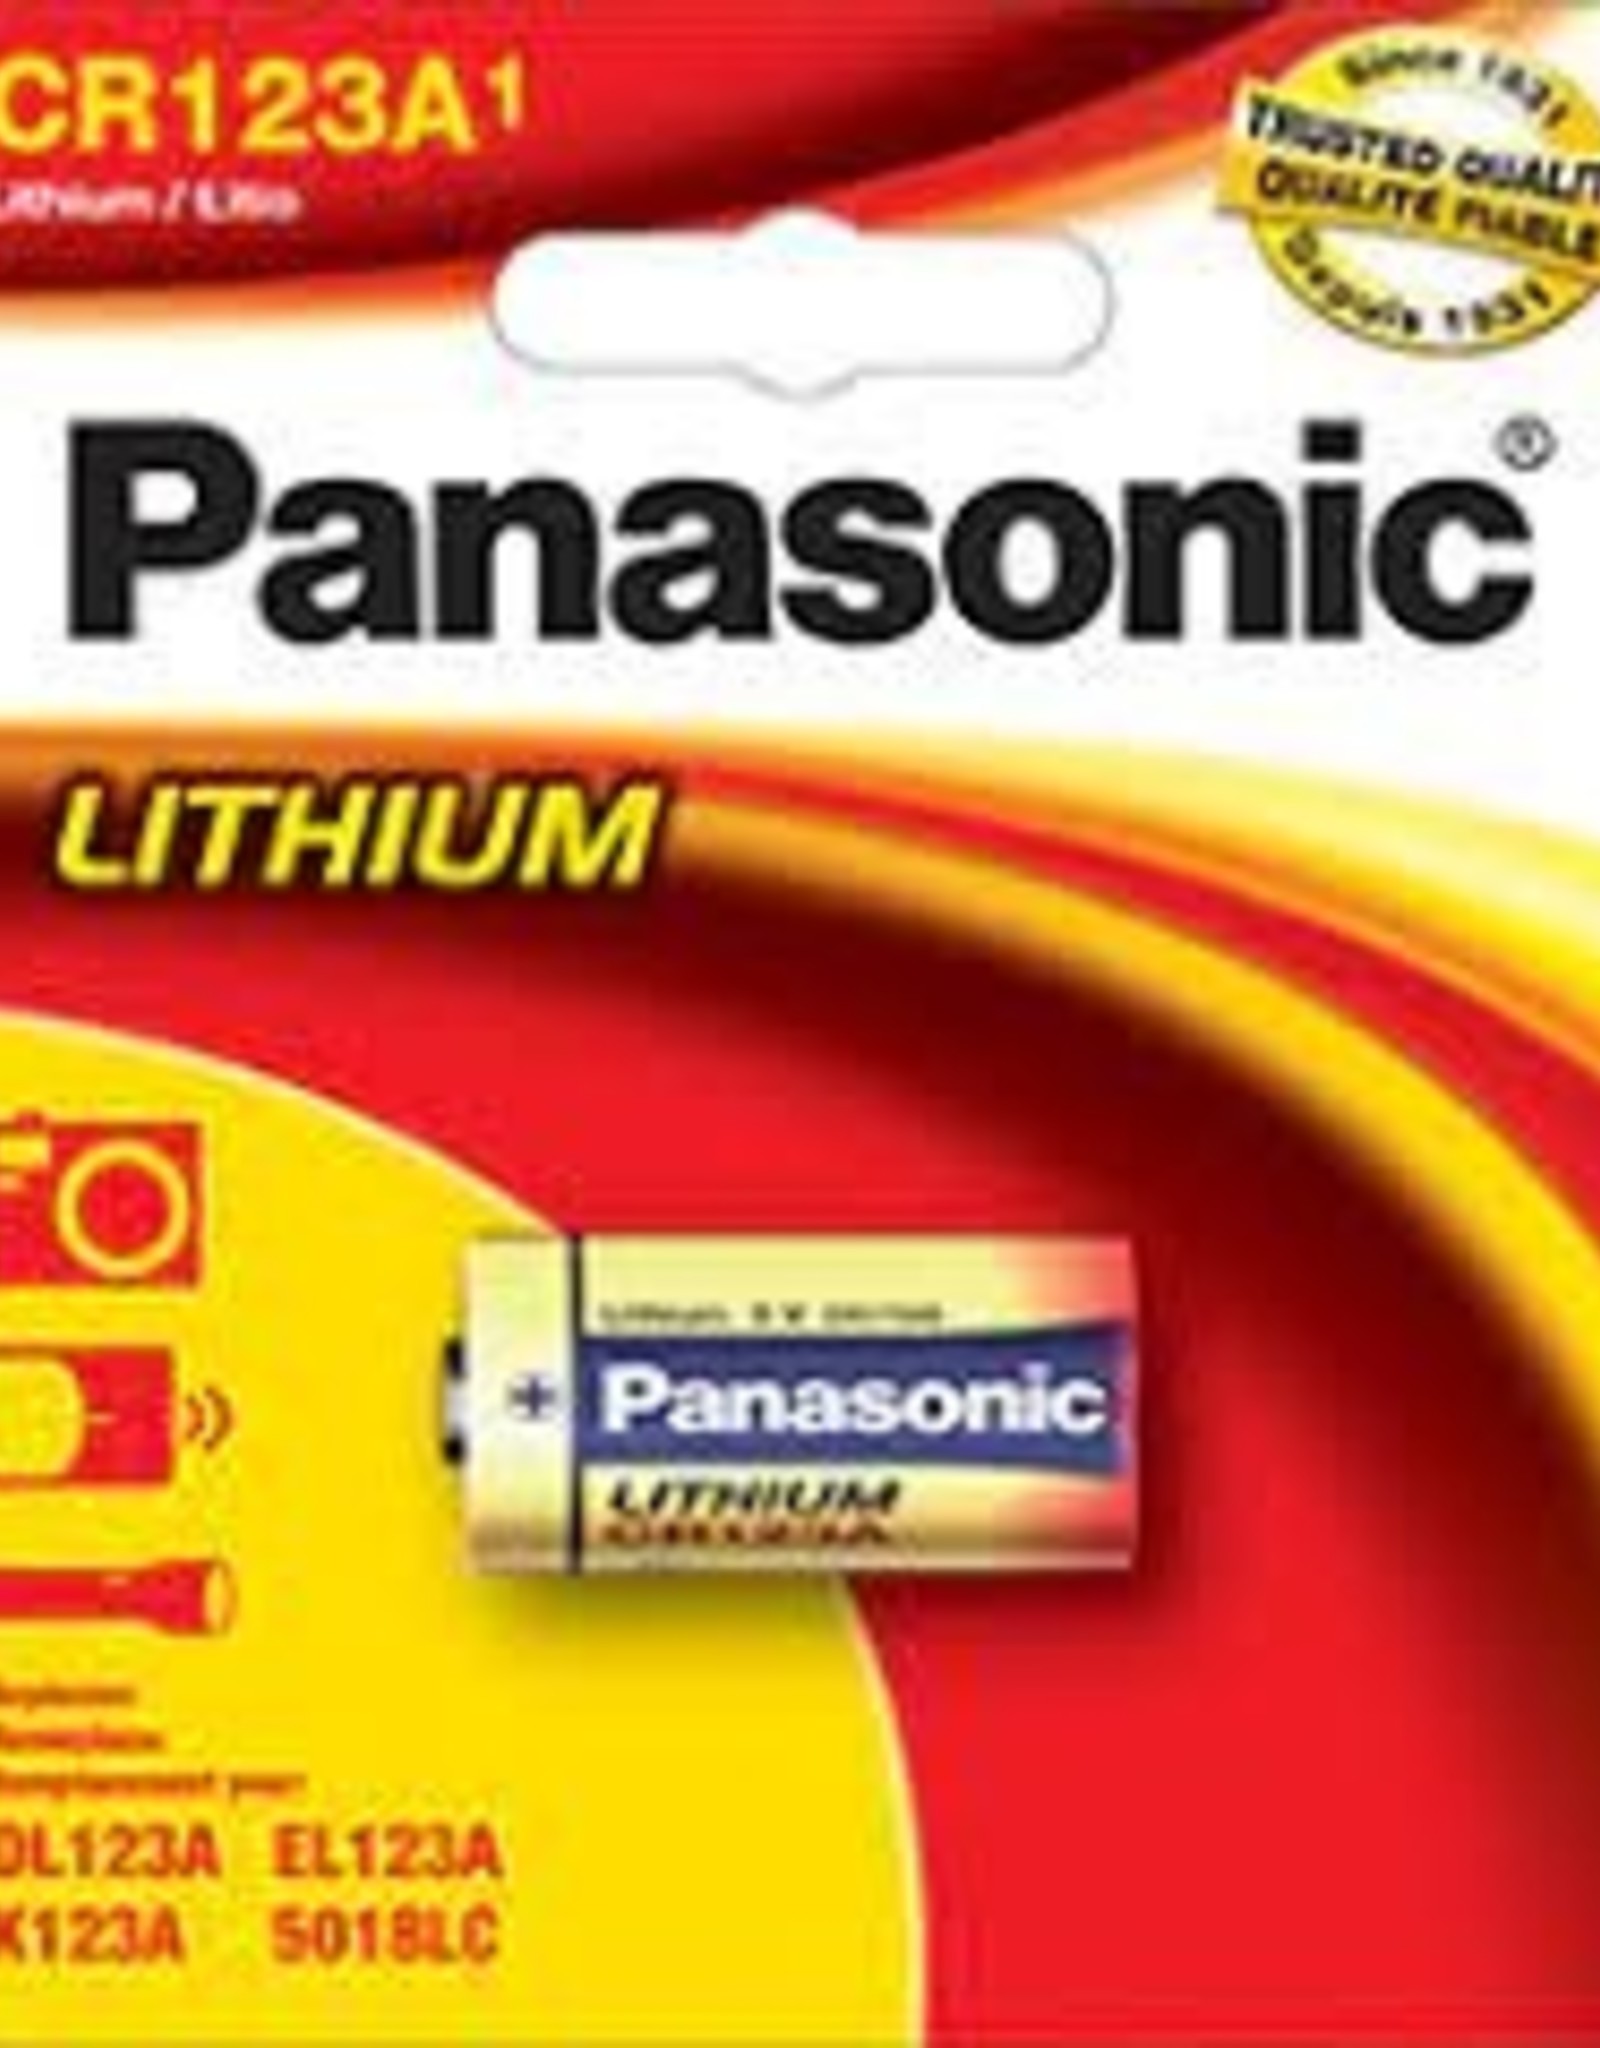 Panasonic LITHIUM CR123A 1 PACK